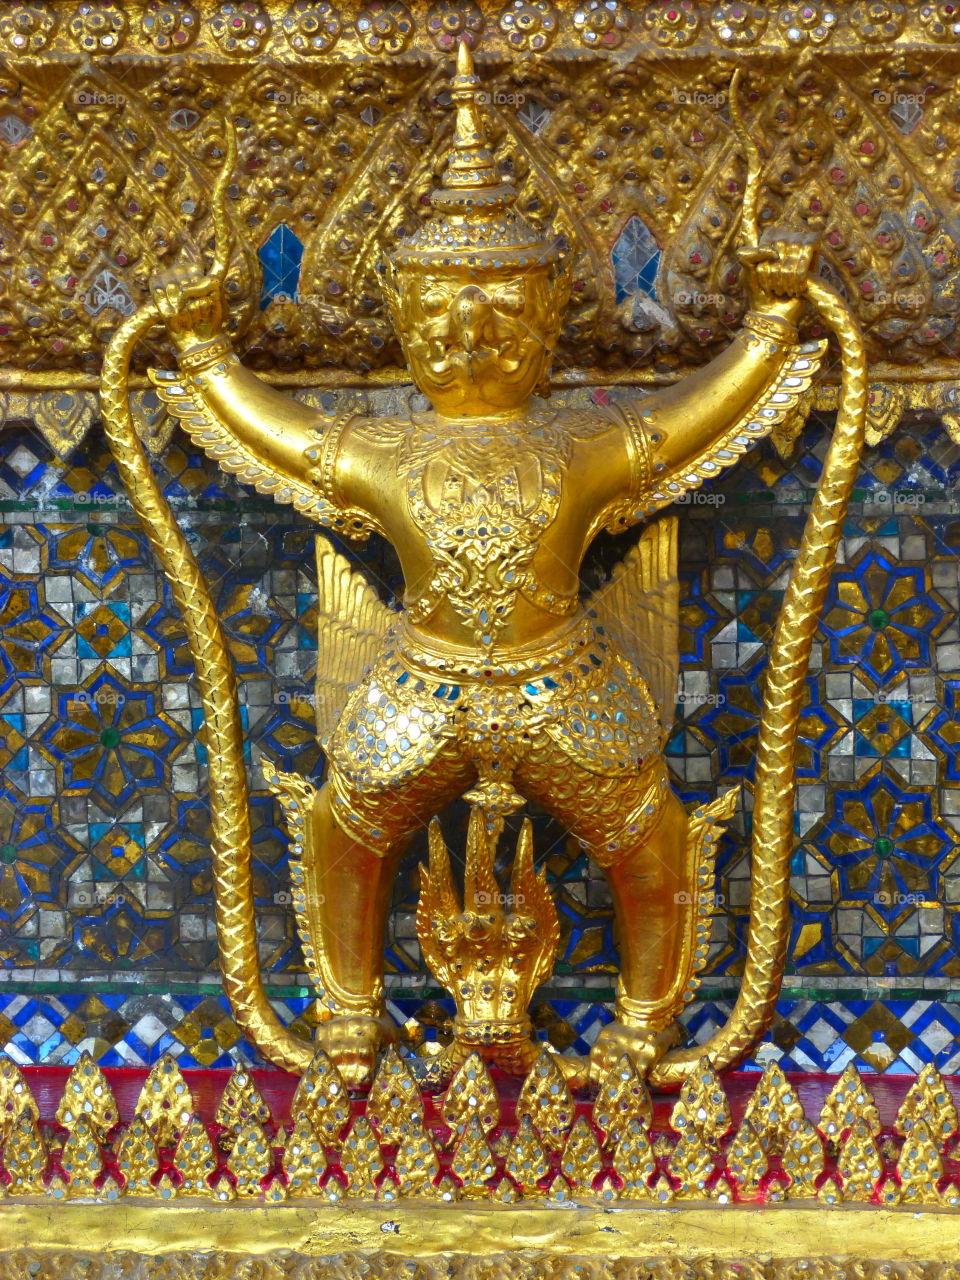 Temple detail, Bangkok